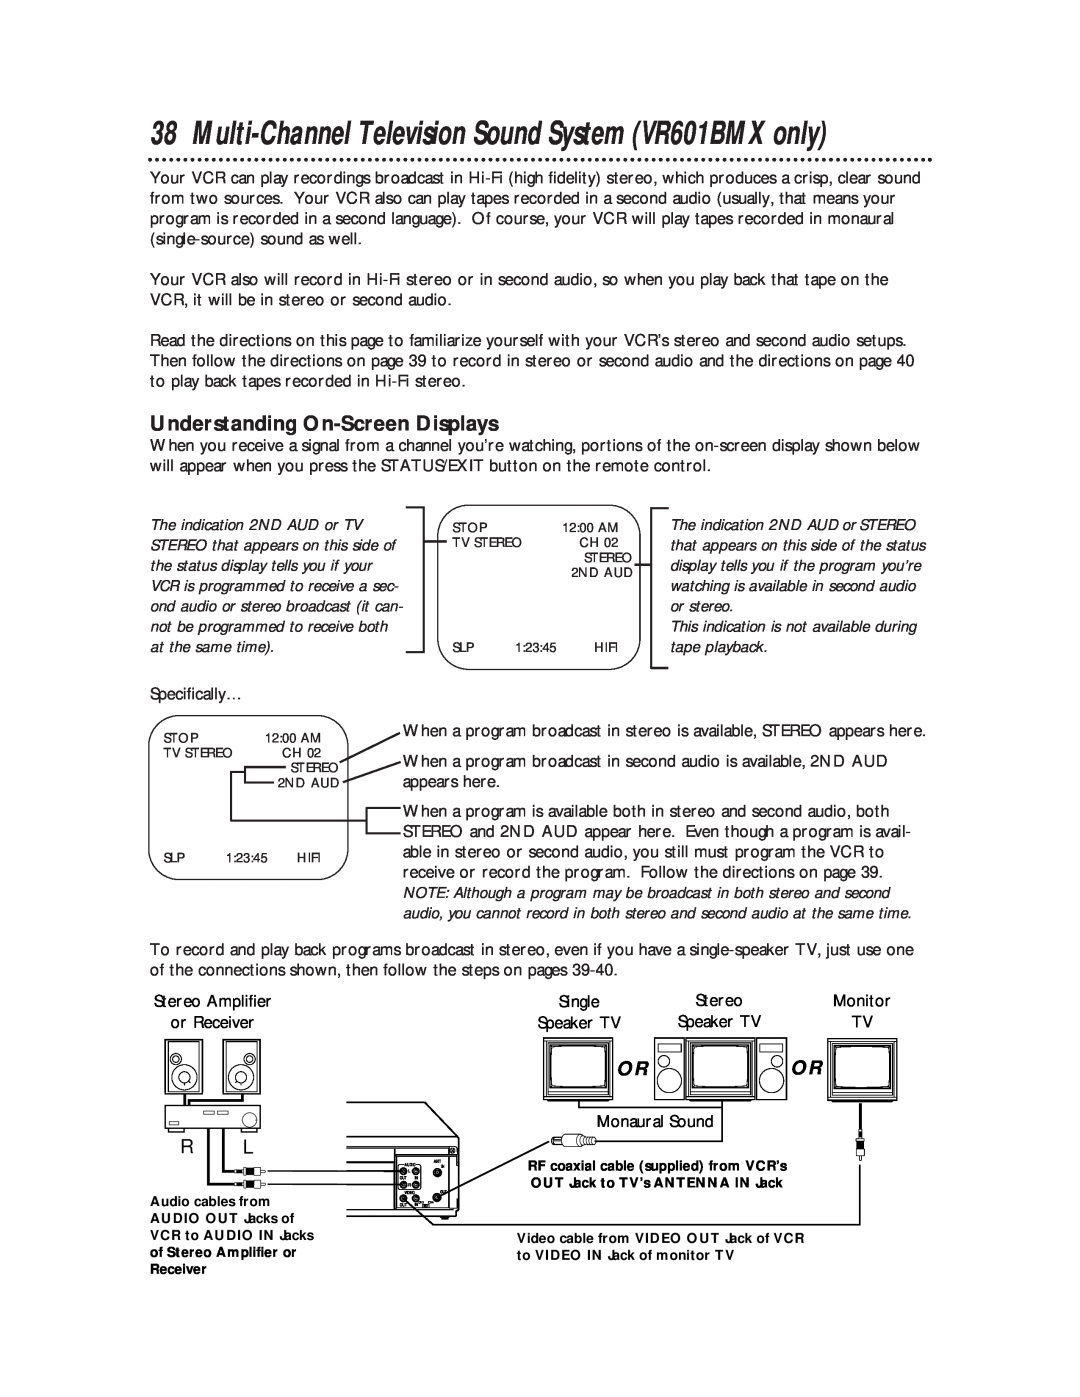 Magnavox VR401BMX, VR601BMX owner manual Understanding On-ScreenDisplays 